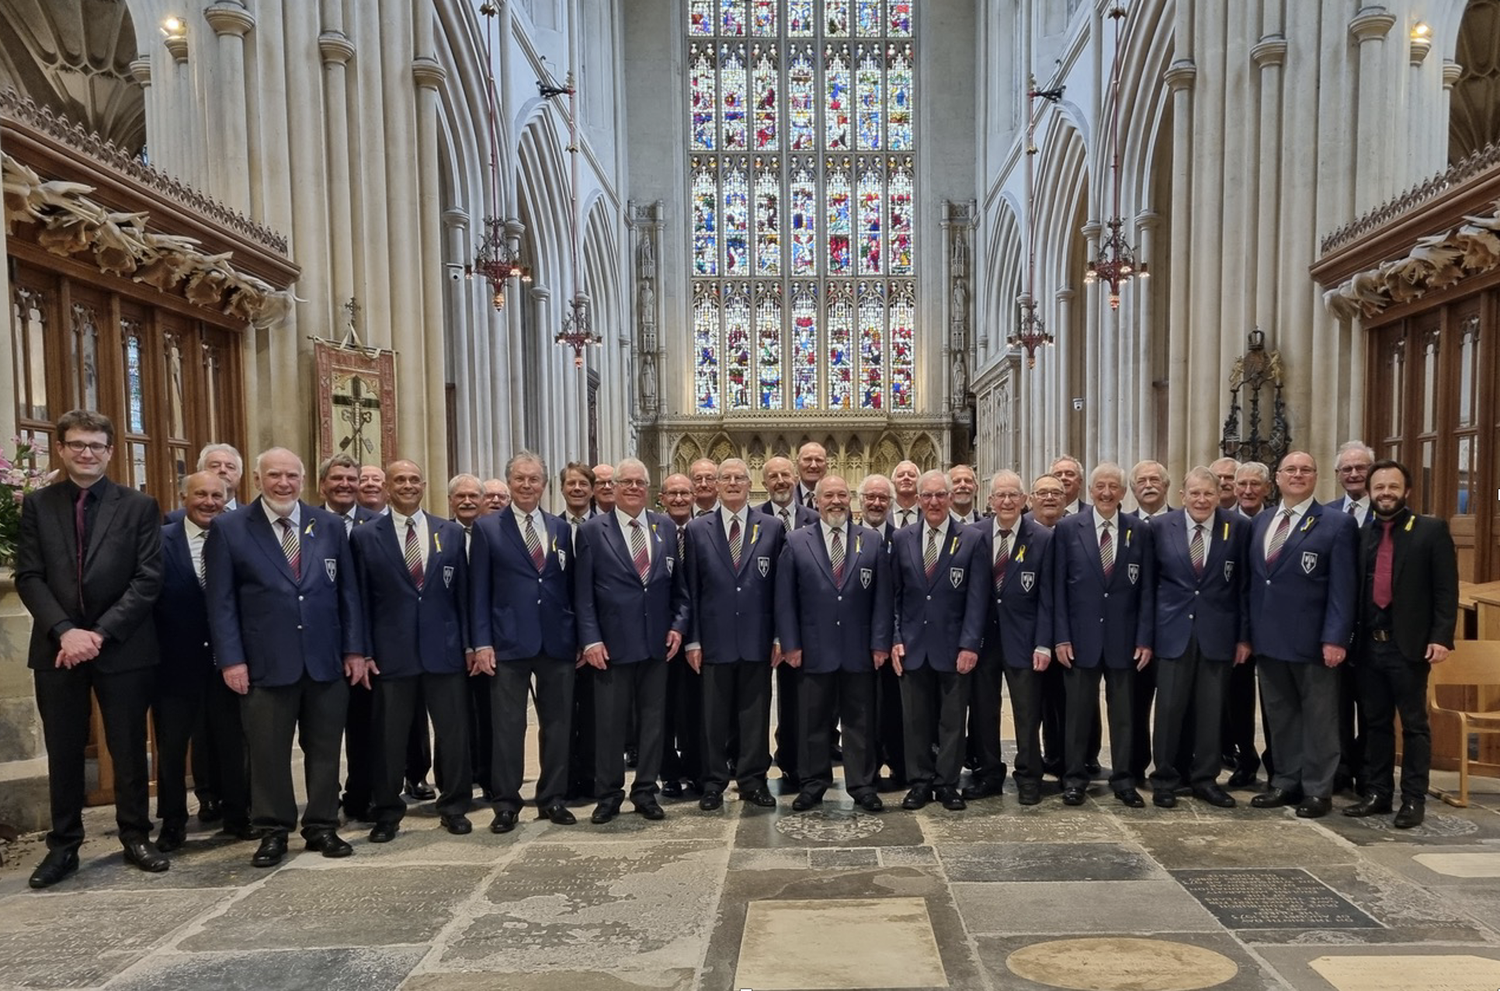 Weybridge Male Voice Choir singing in Cornwall International Male Choral Festival